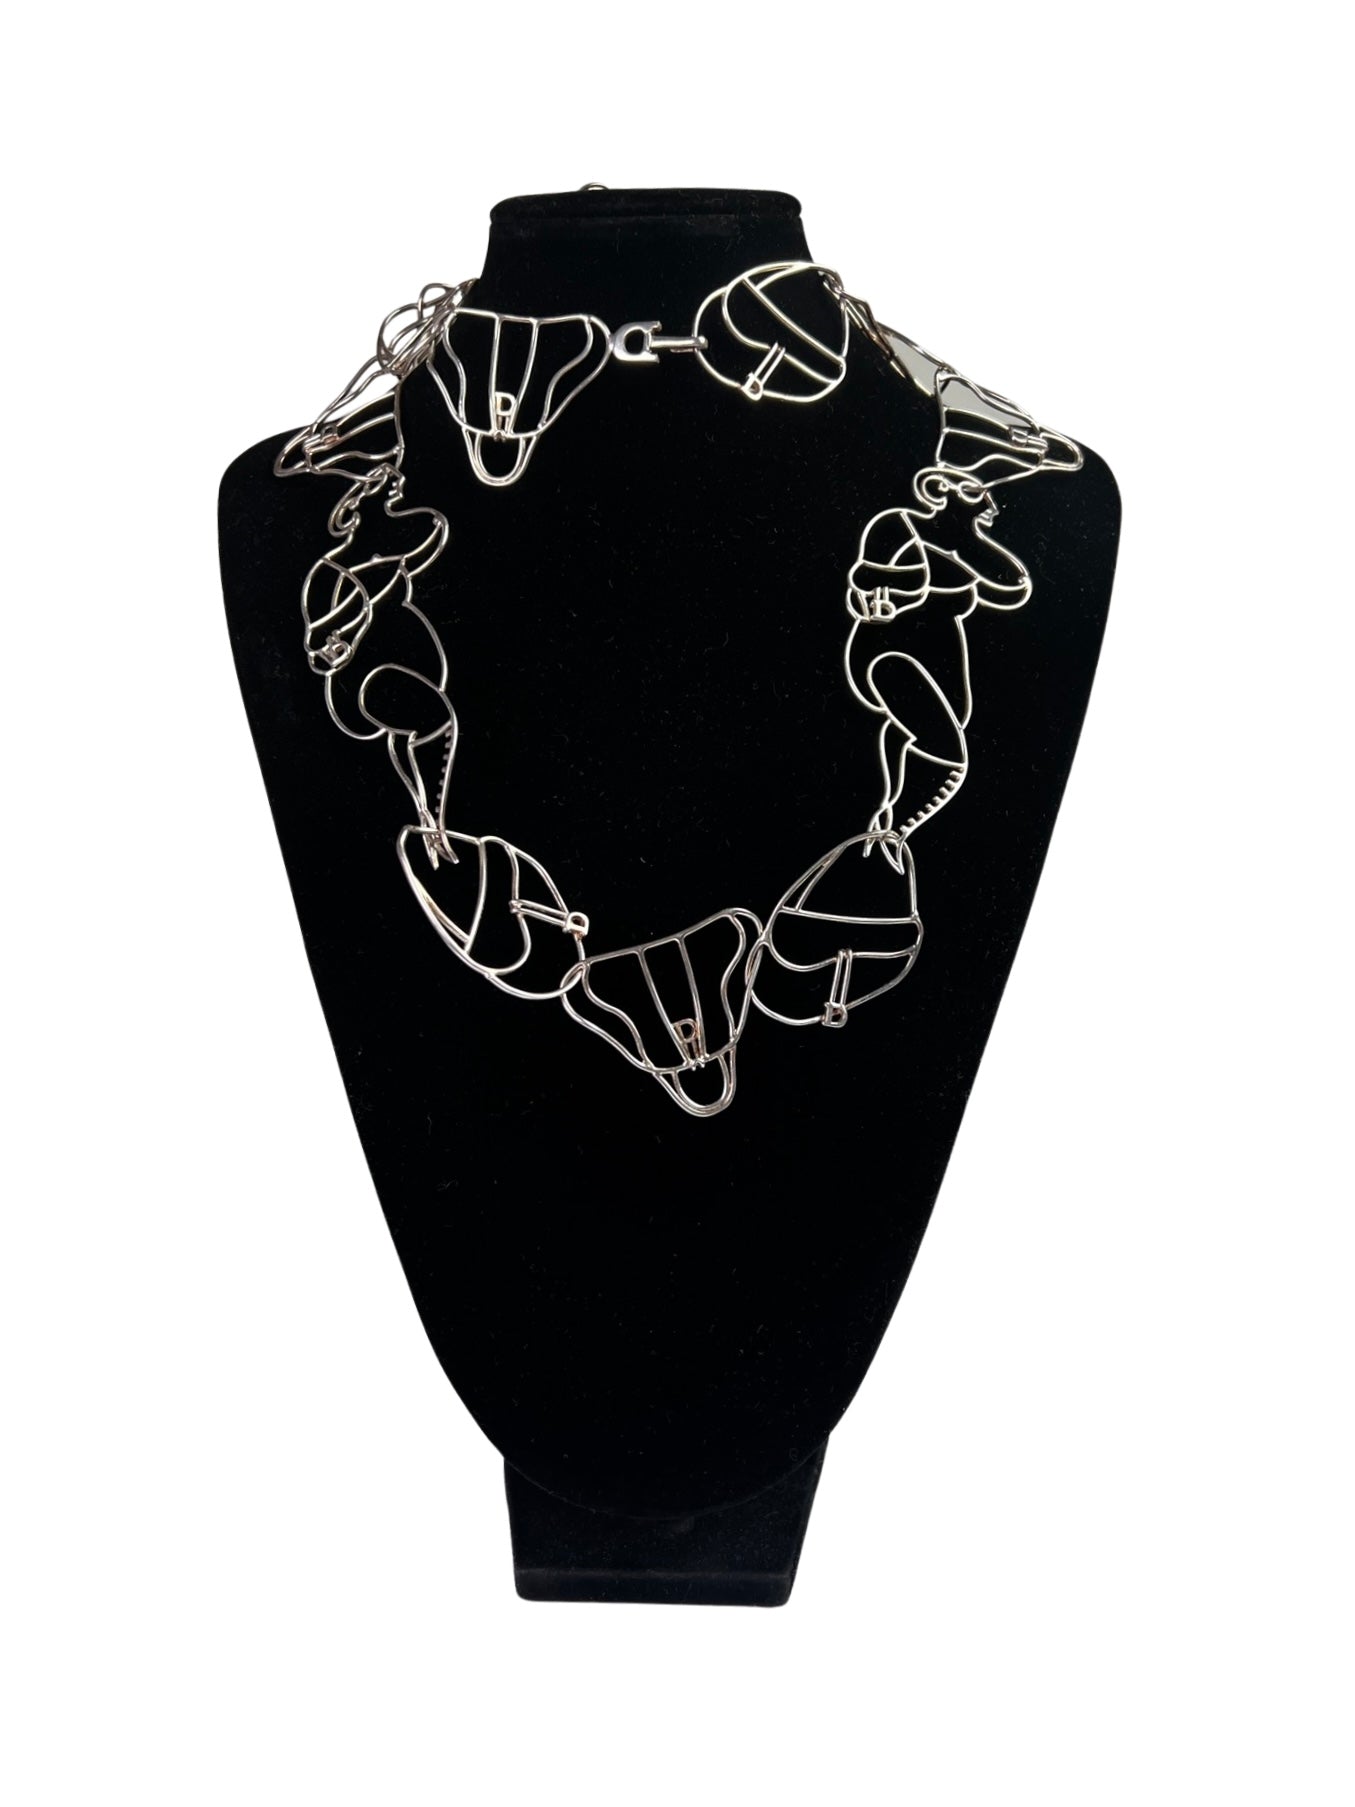 Dior Spring 2005 Sterling Silver Necklace